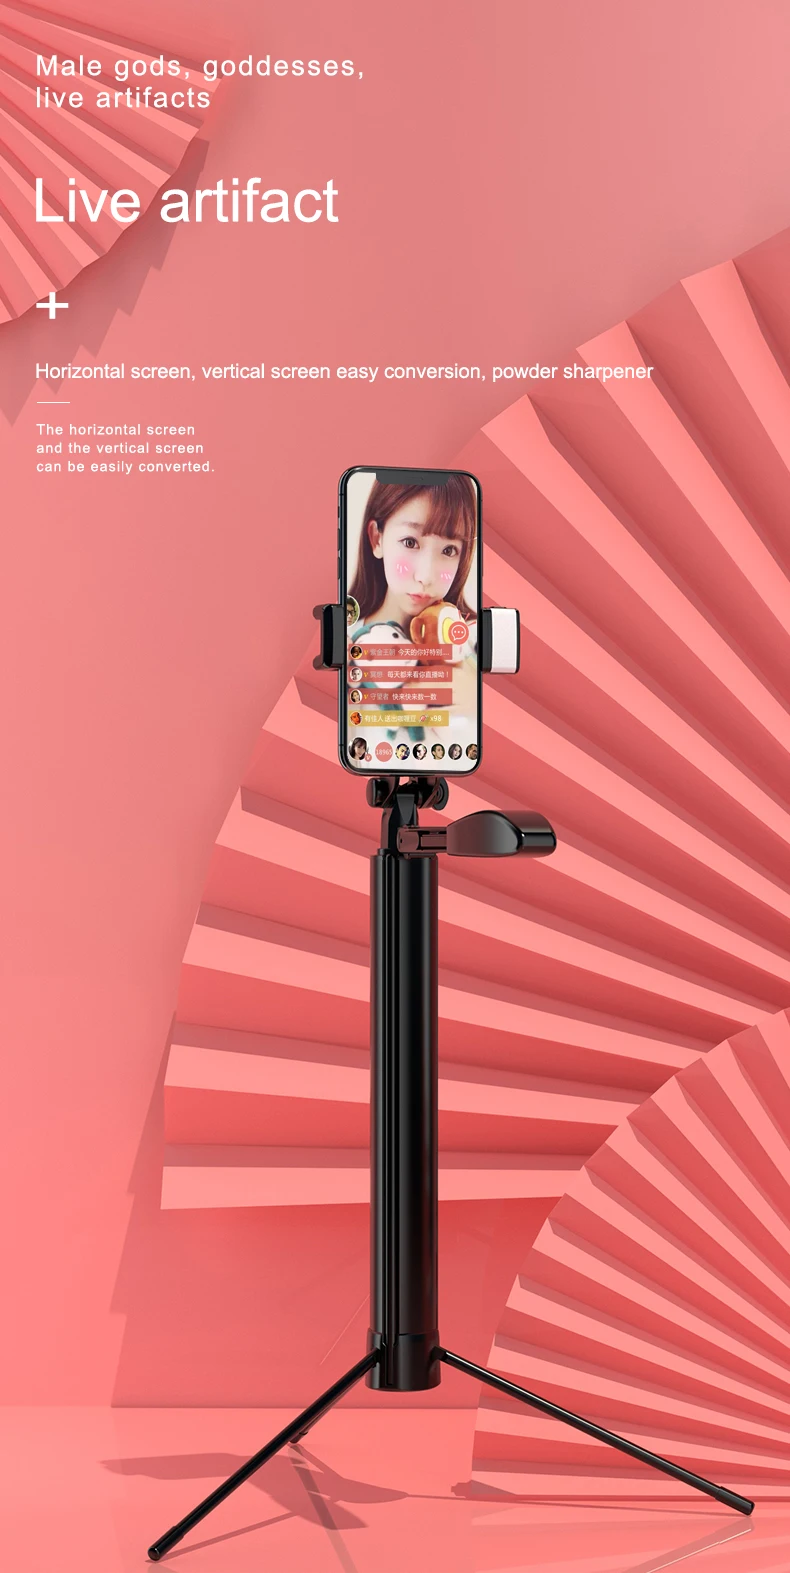 CYKE 1,6 м селфи палка длинный штатив bluetooth Видео стабилизатор для iPhone Xiaomi huawei Bluetooth штатив селфи палка